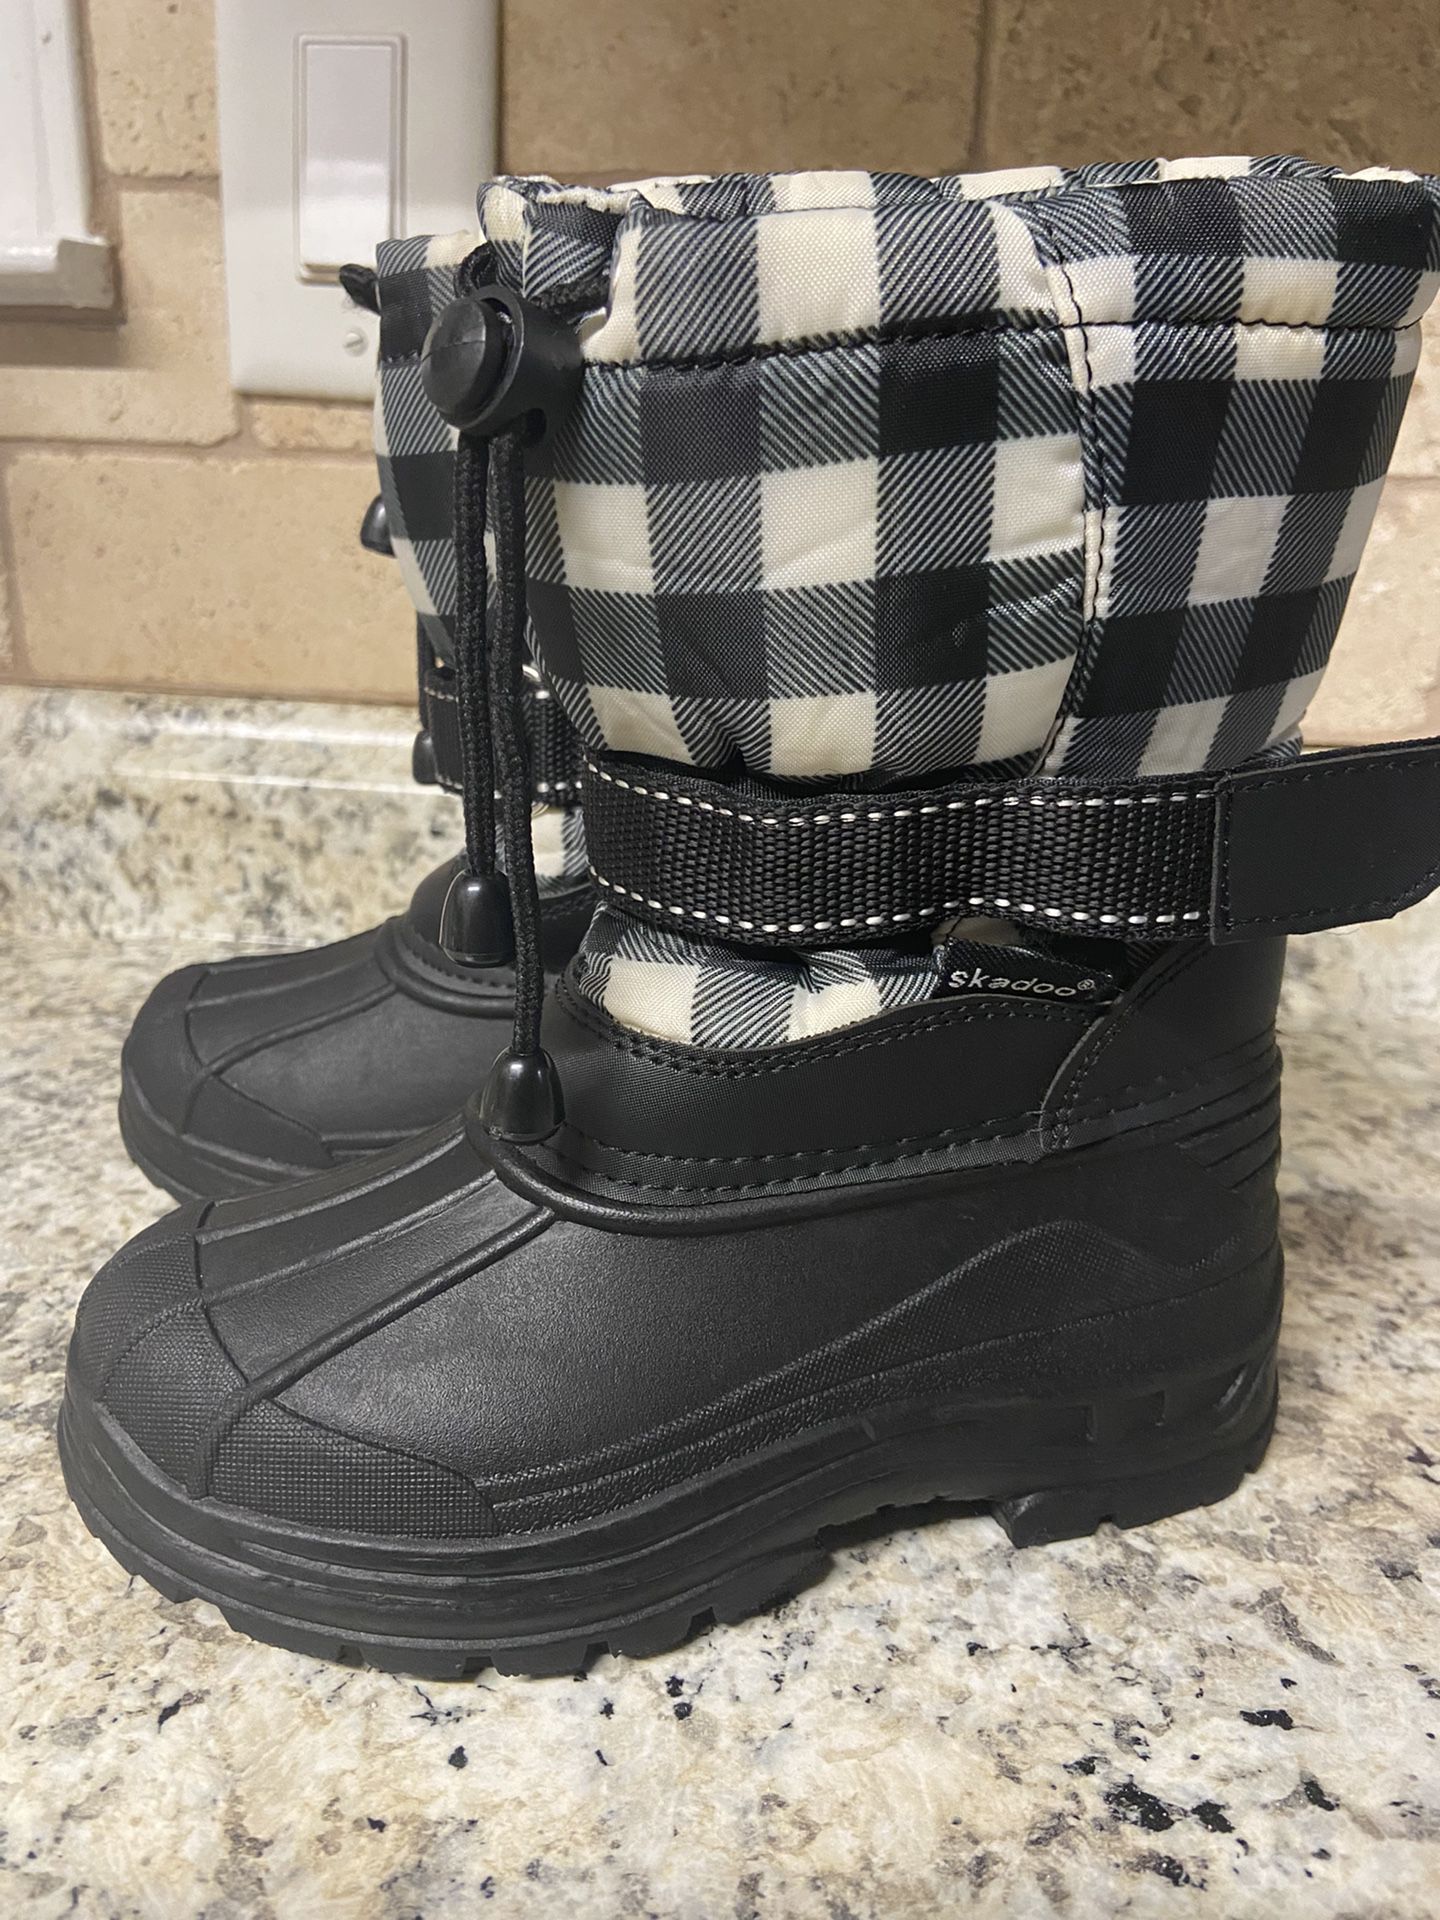 Snow Winter Boots Size Kids 10c